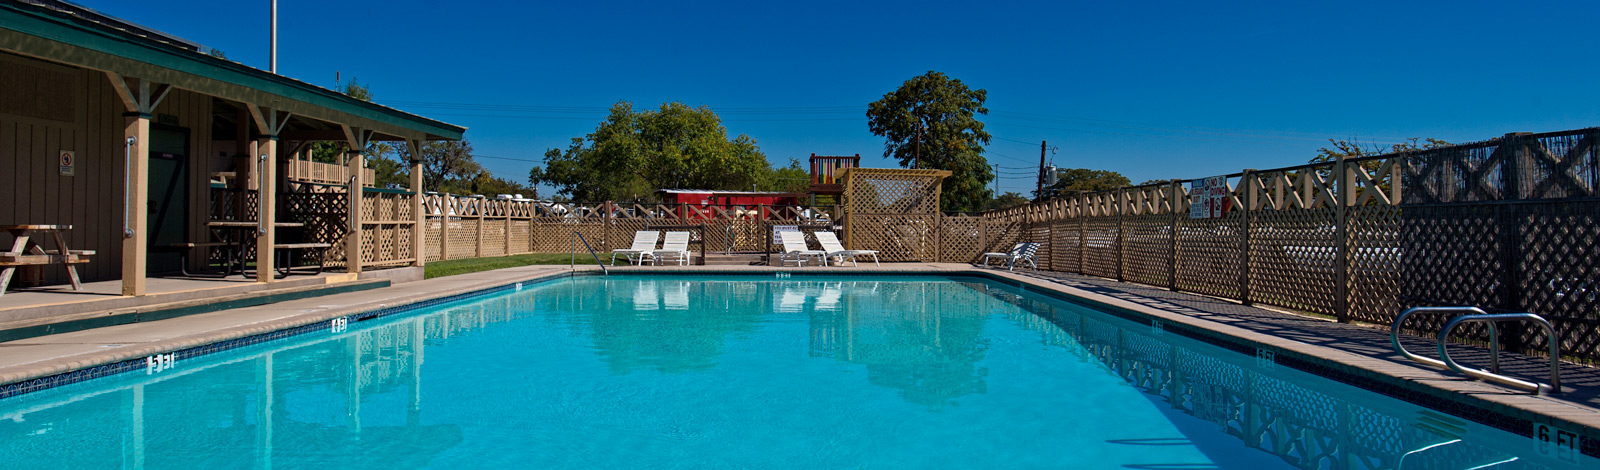 Bandera Pioneer RV River Resort - Pool Slim